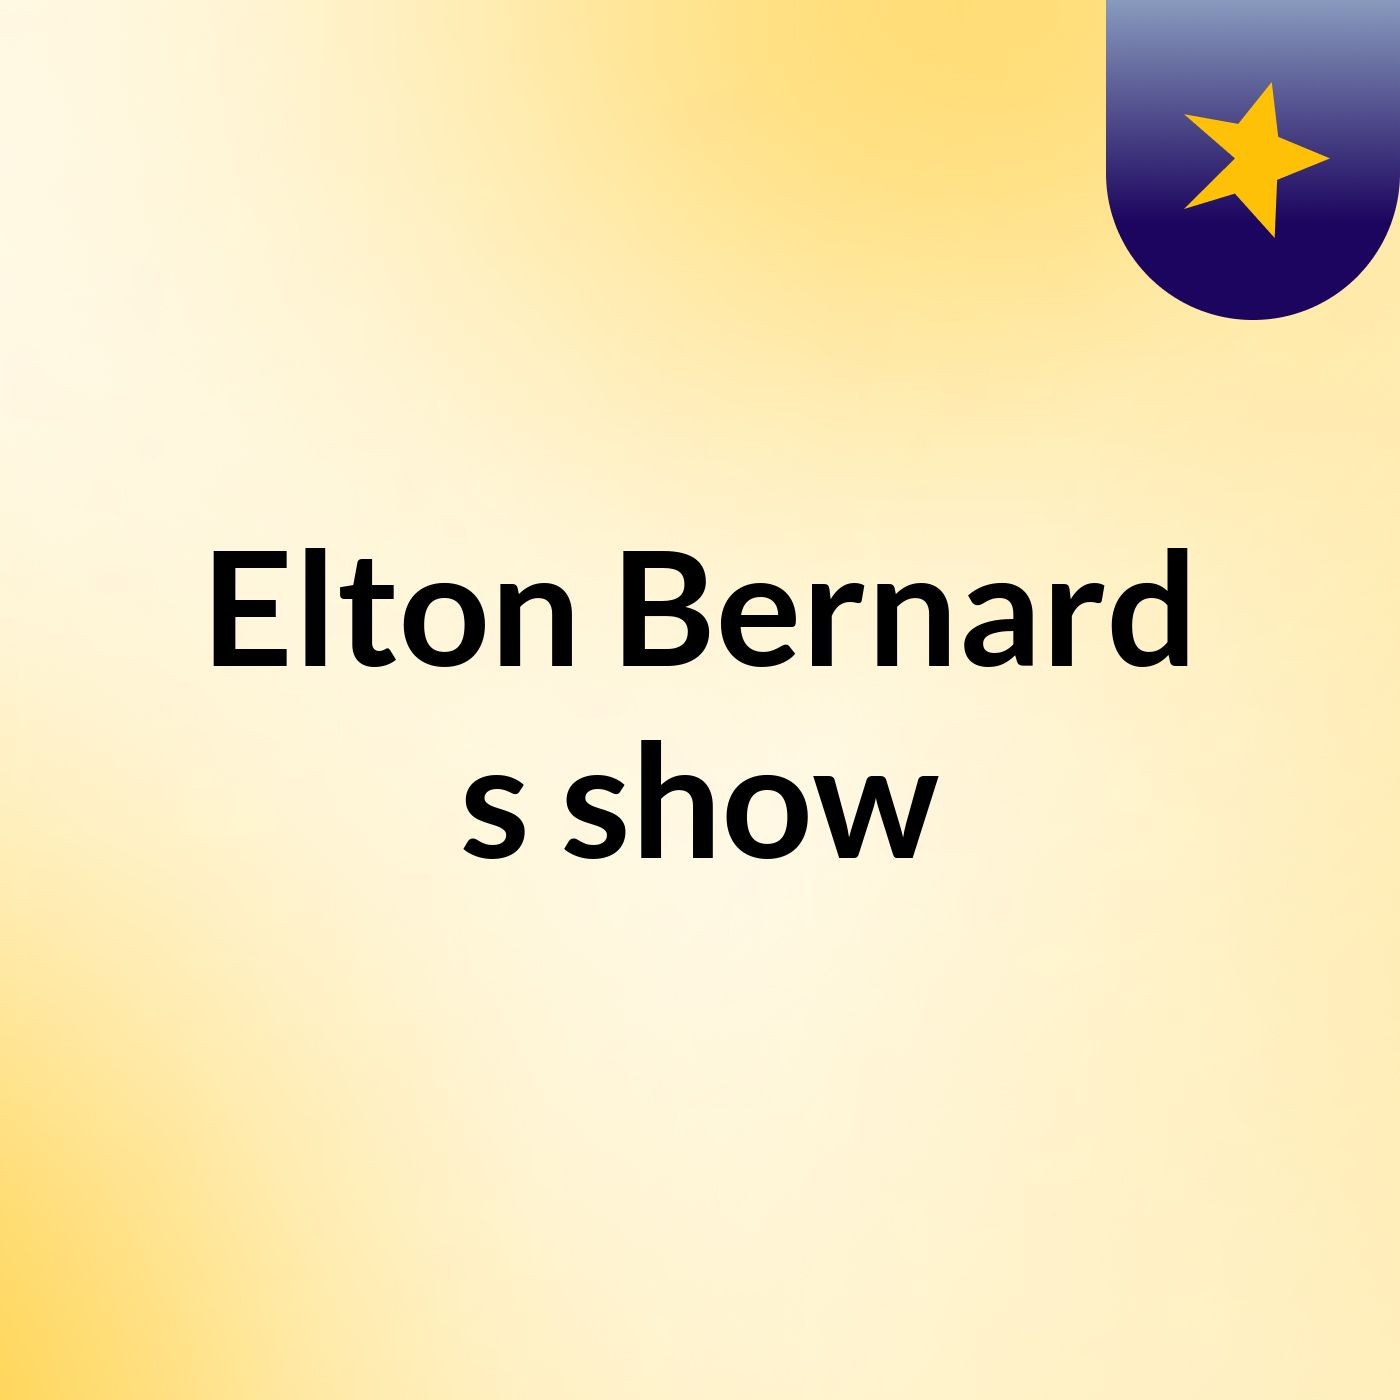 Elton Bernard's show